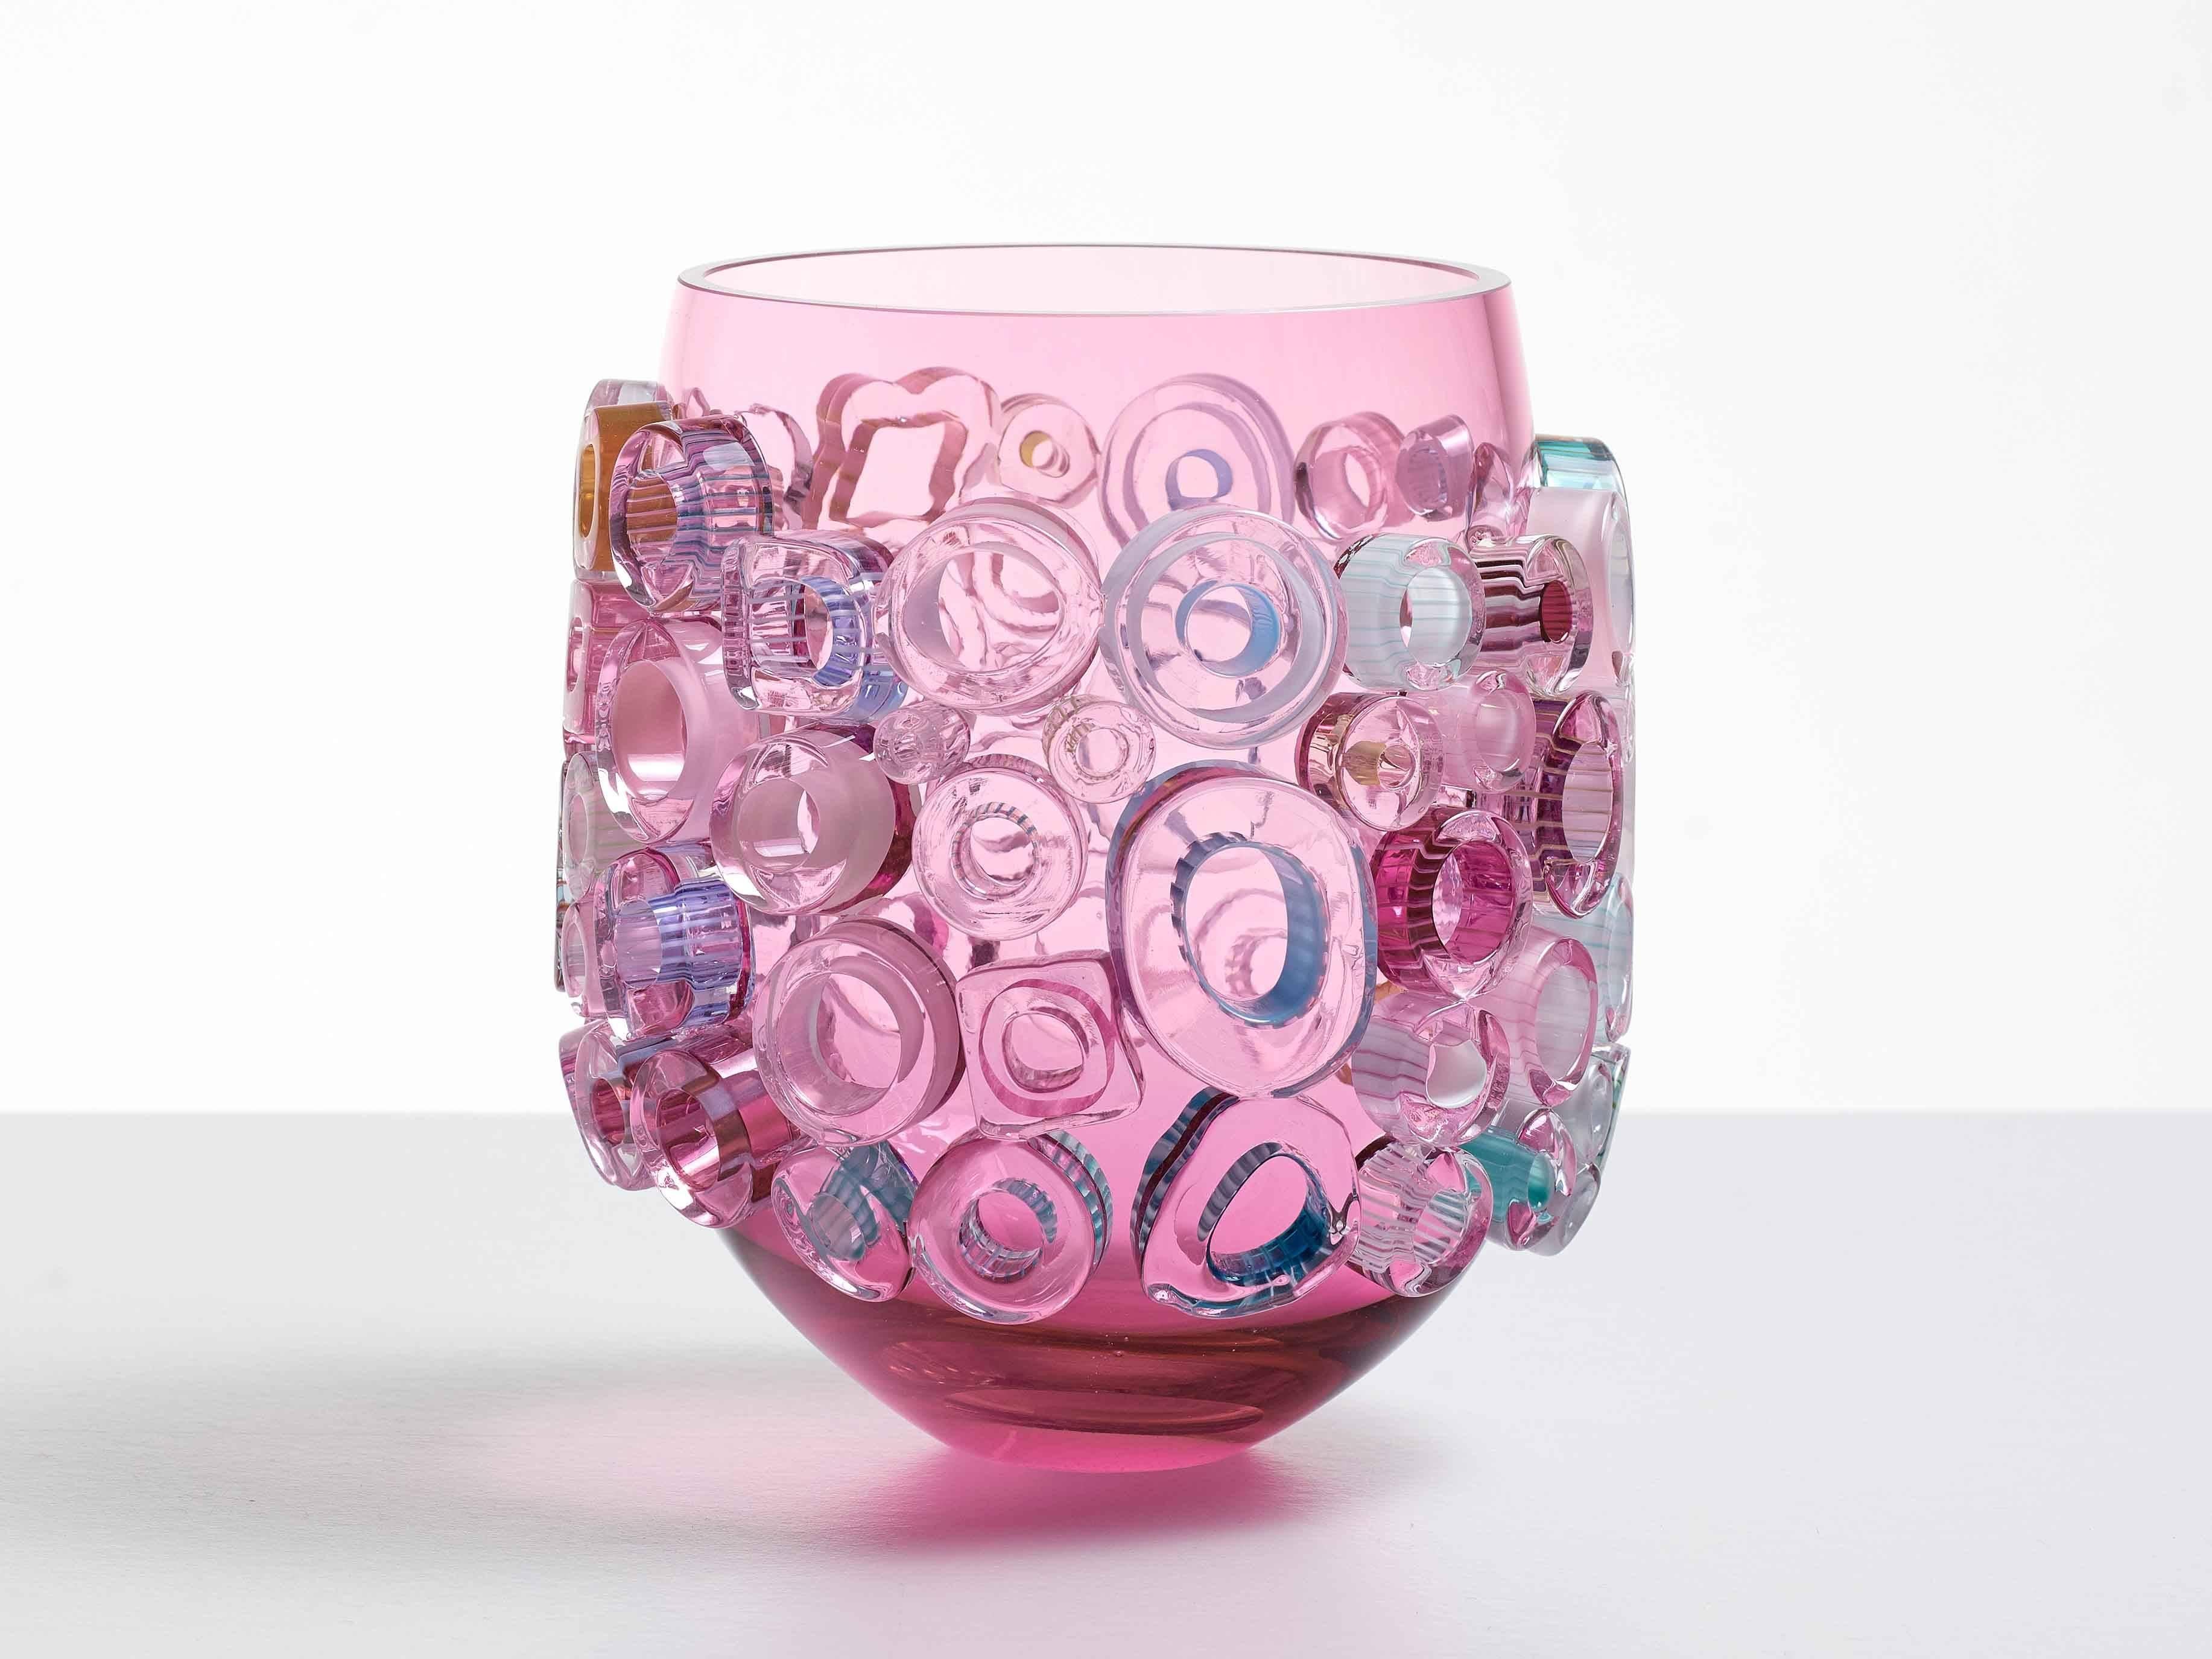 Sabine Lintzen Figurative Sculpture - Blown glass vessel. Murano style glass vase. Pink sculptural vase. Dutch artist.